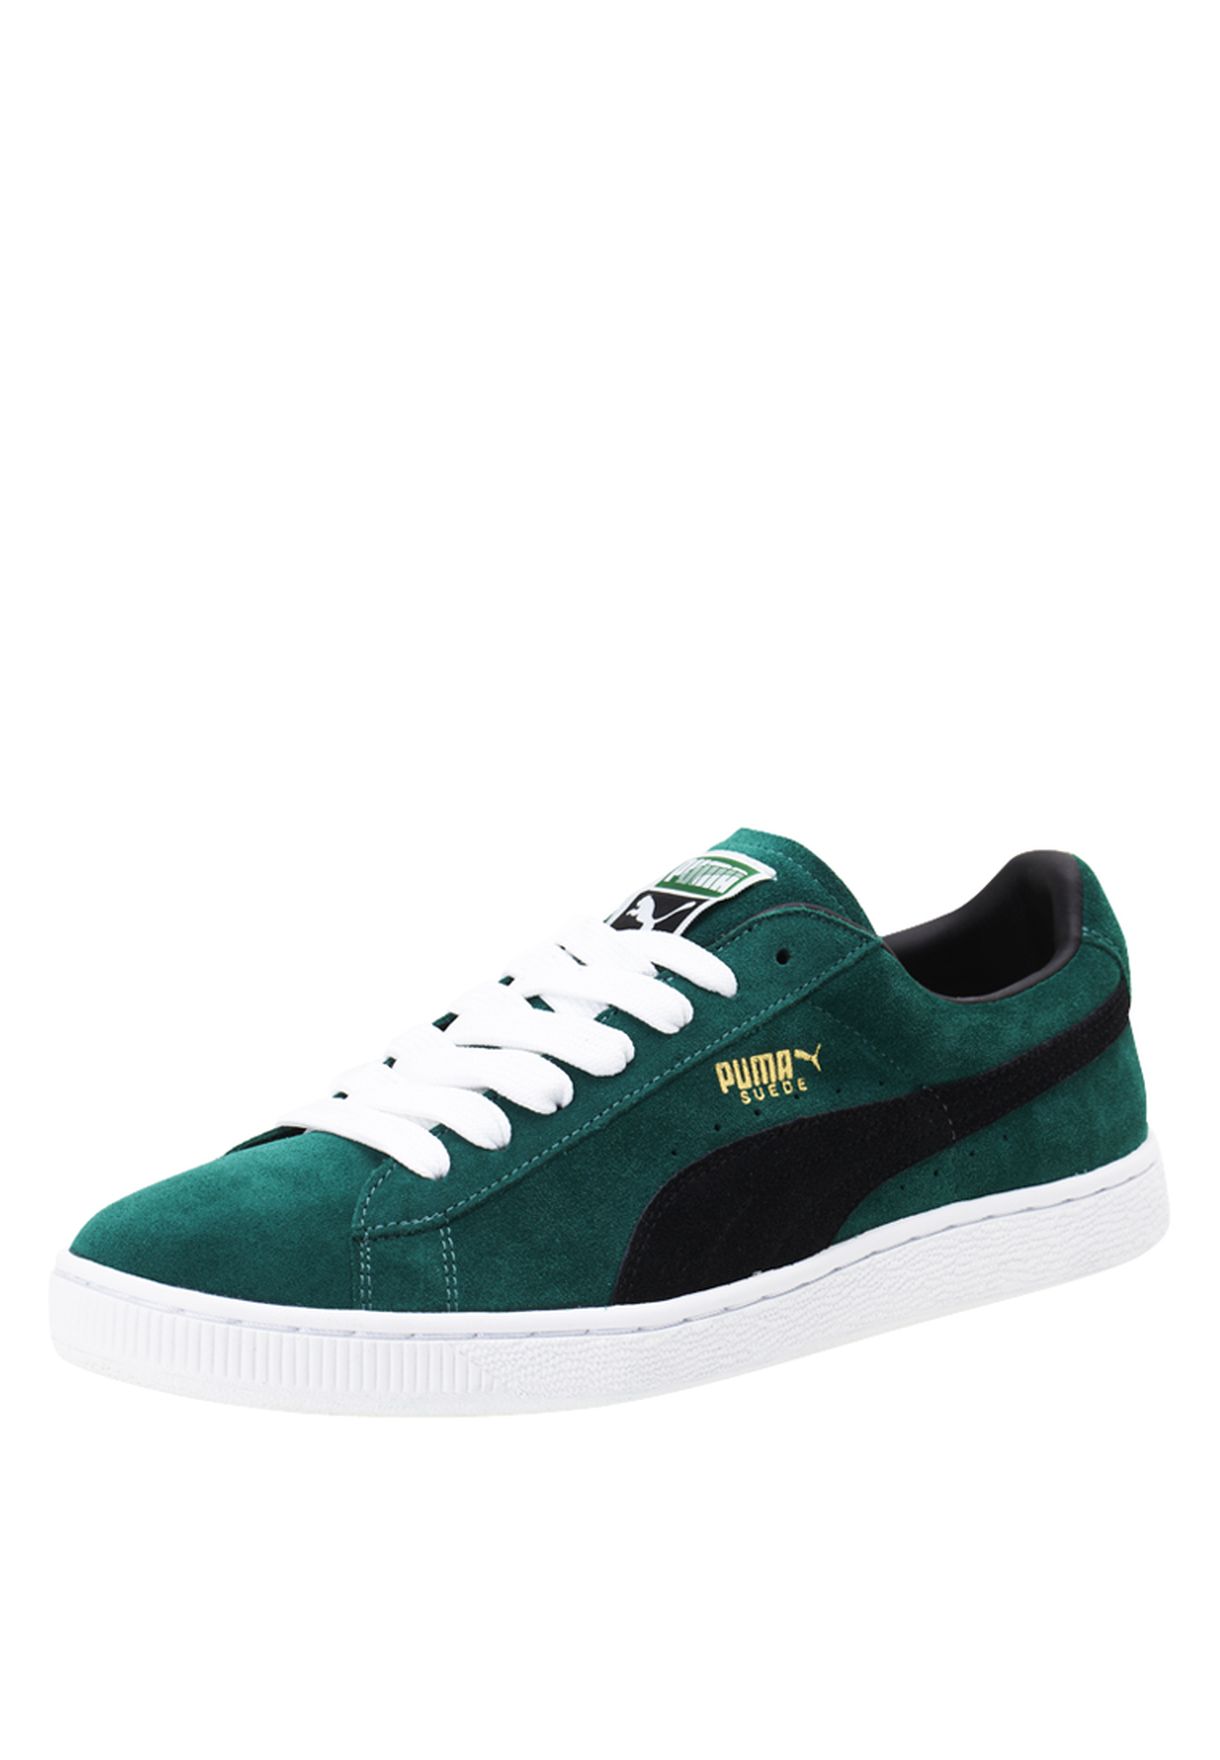 puma green suede shoes